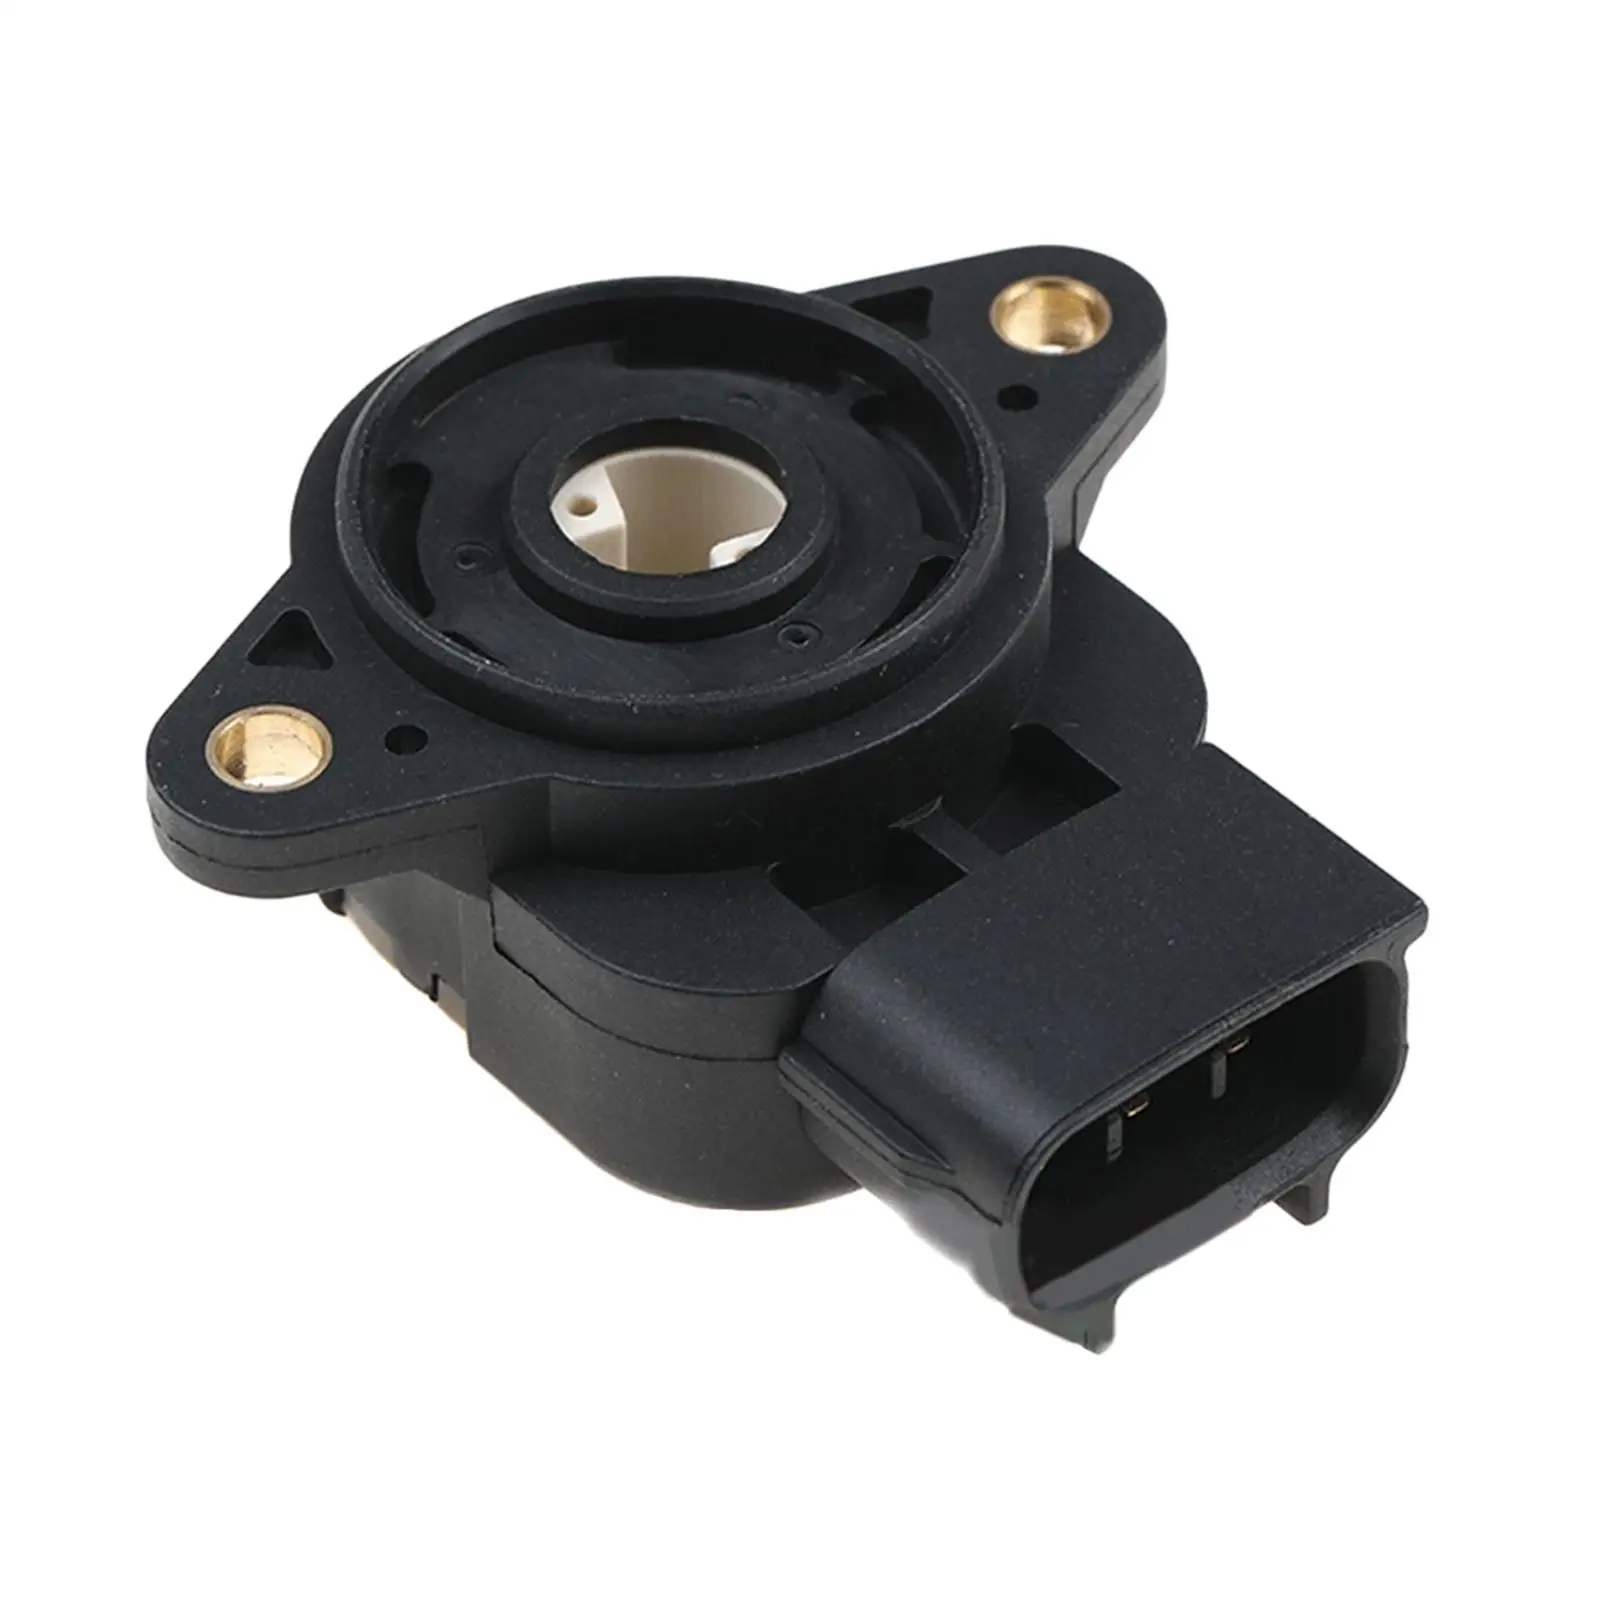 89452-20130 Throttle Position Sensor for Matrix Replacements Parts Replacement Kit